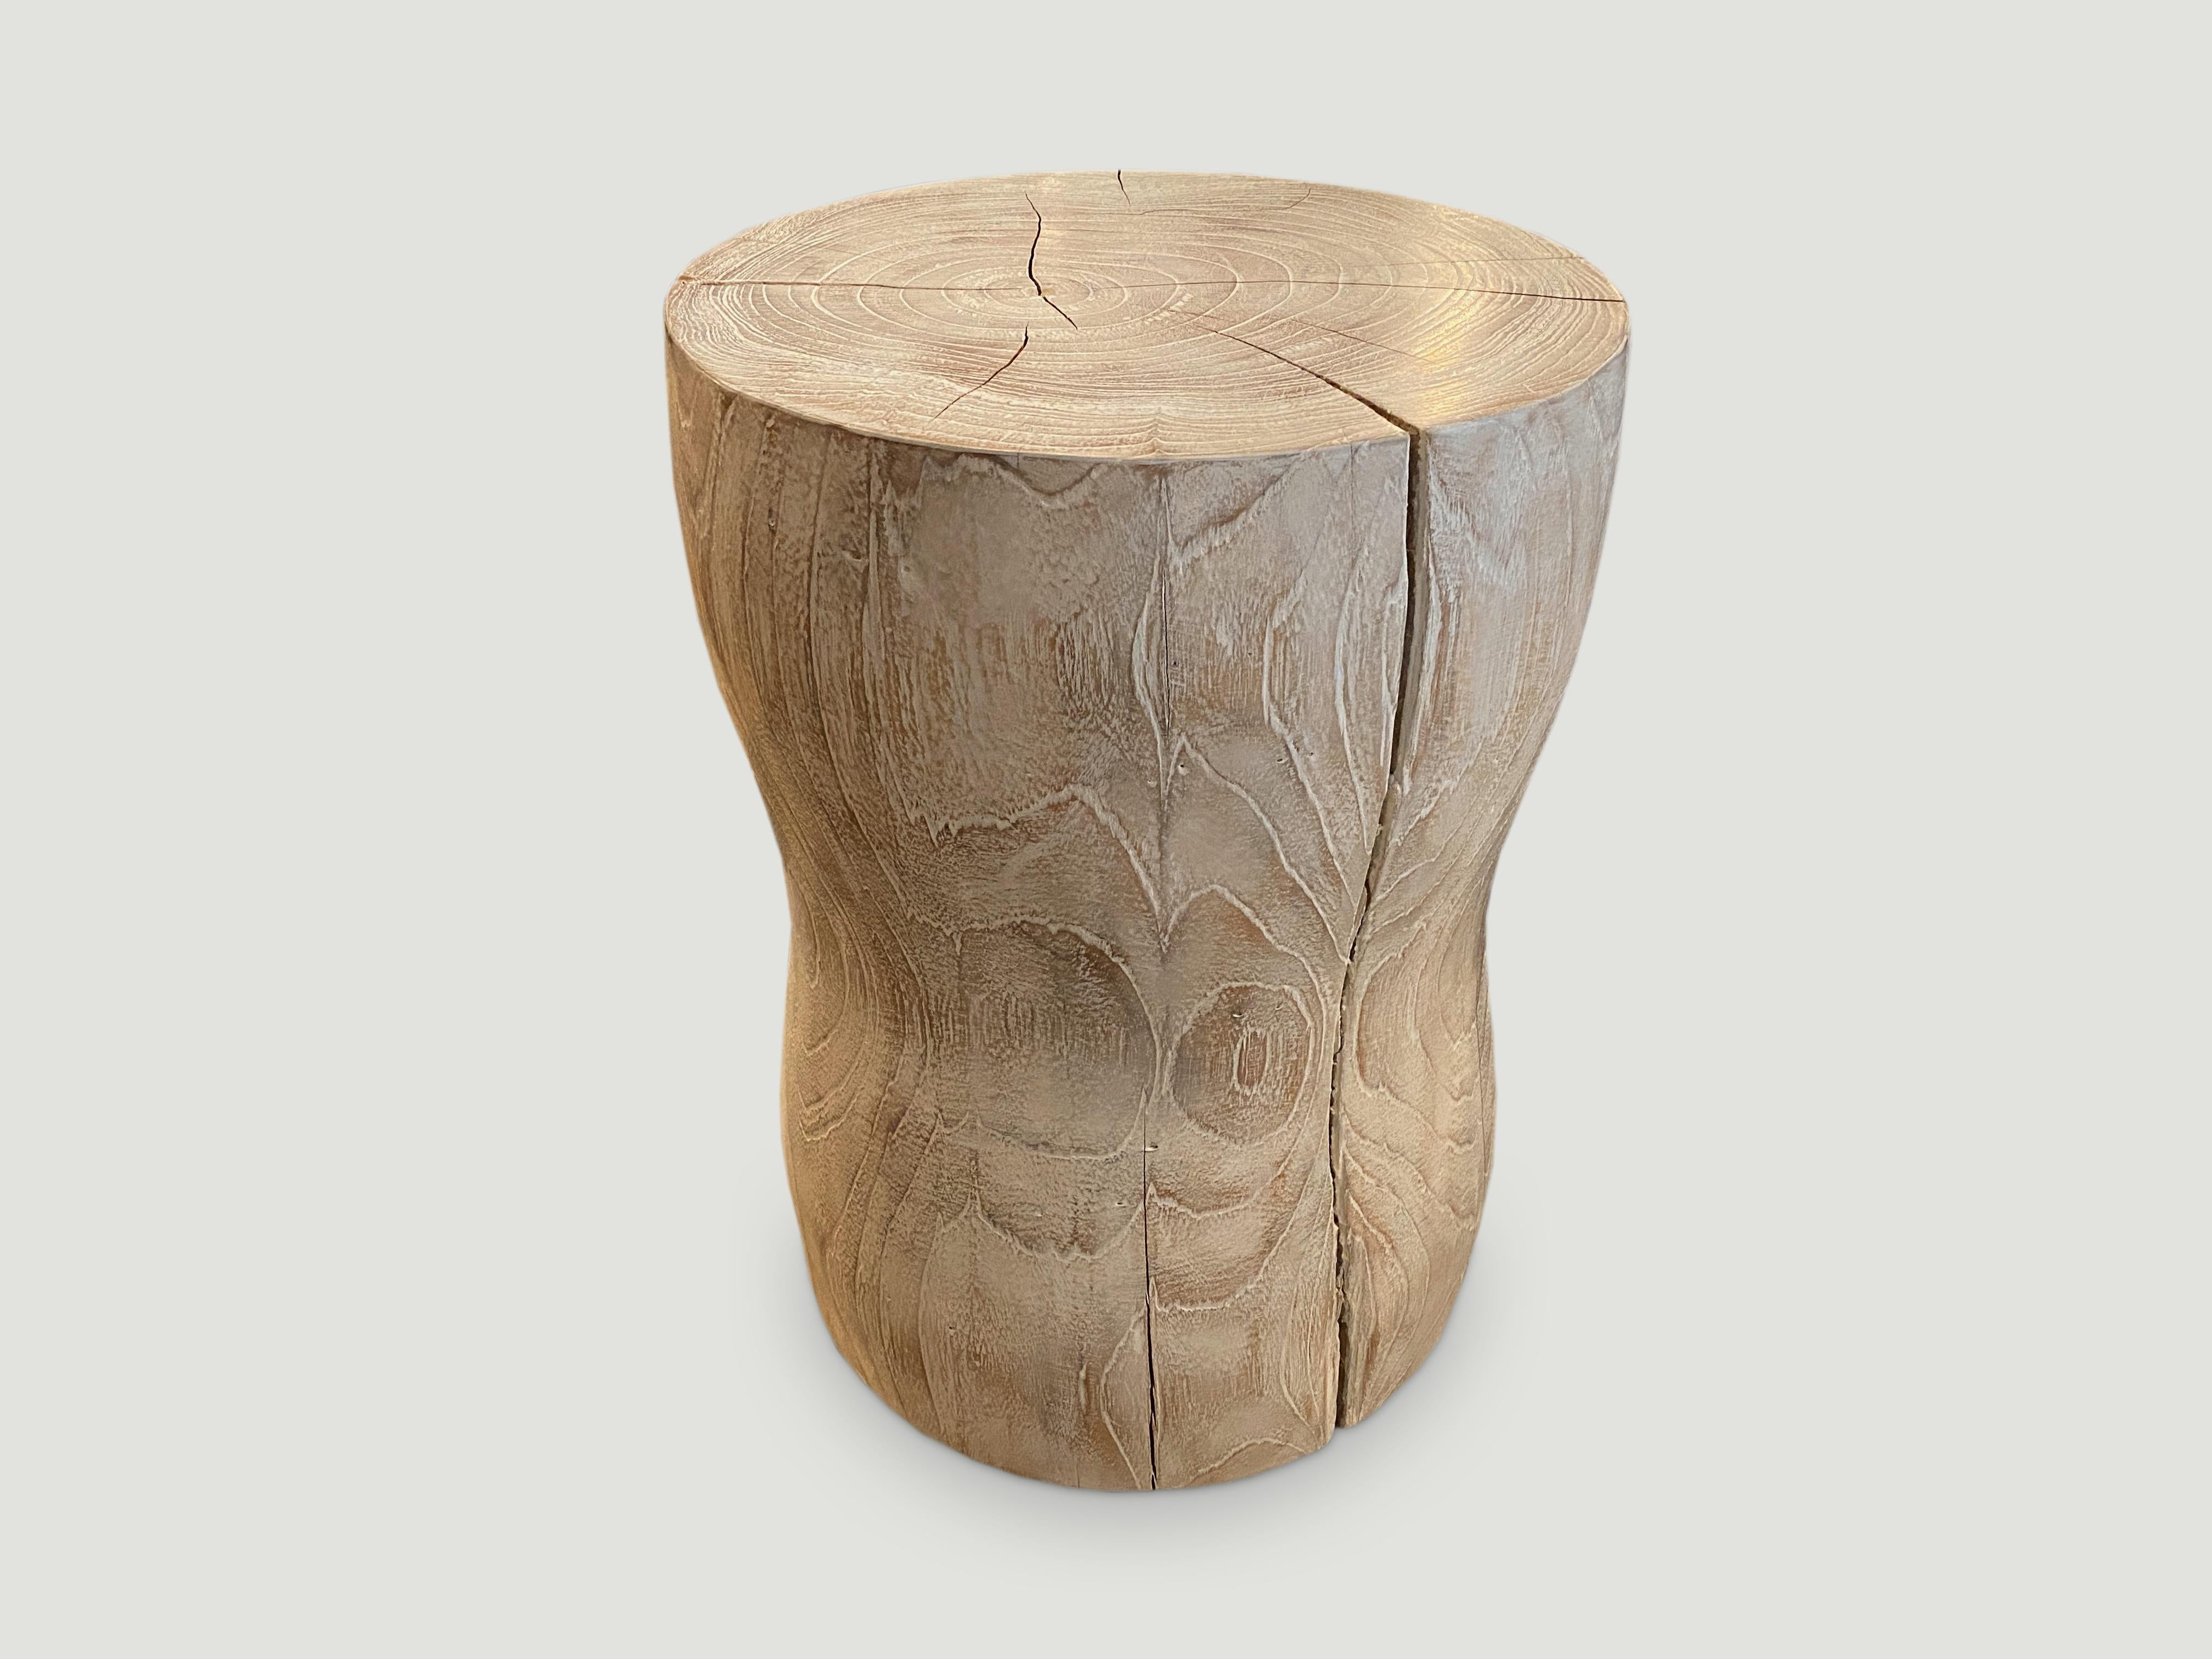 Organic Modern Andrianna Shamaris Hand Carved Teak Wood Side Table or Stool